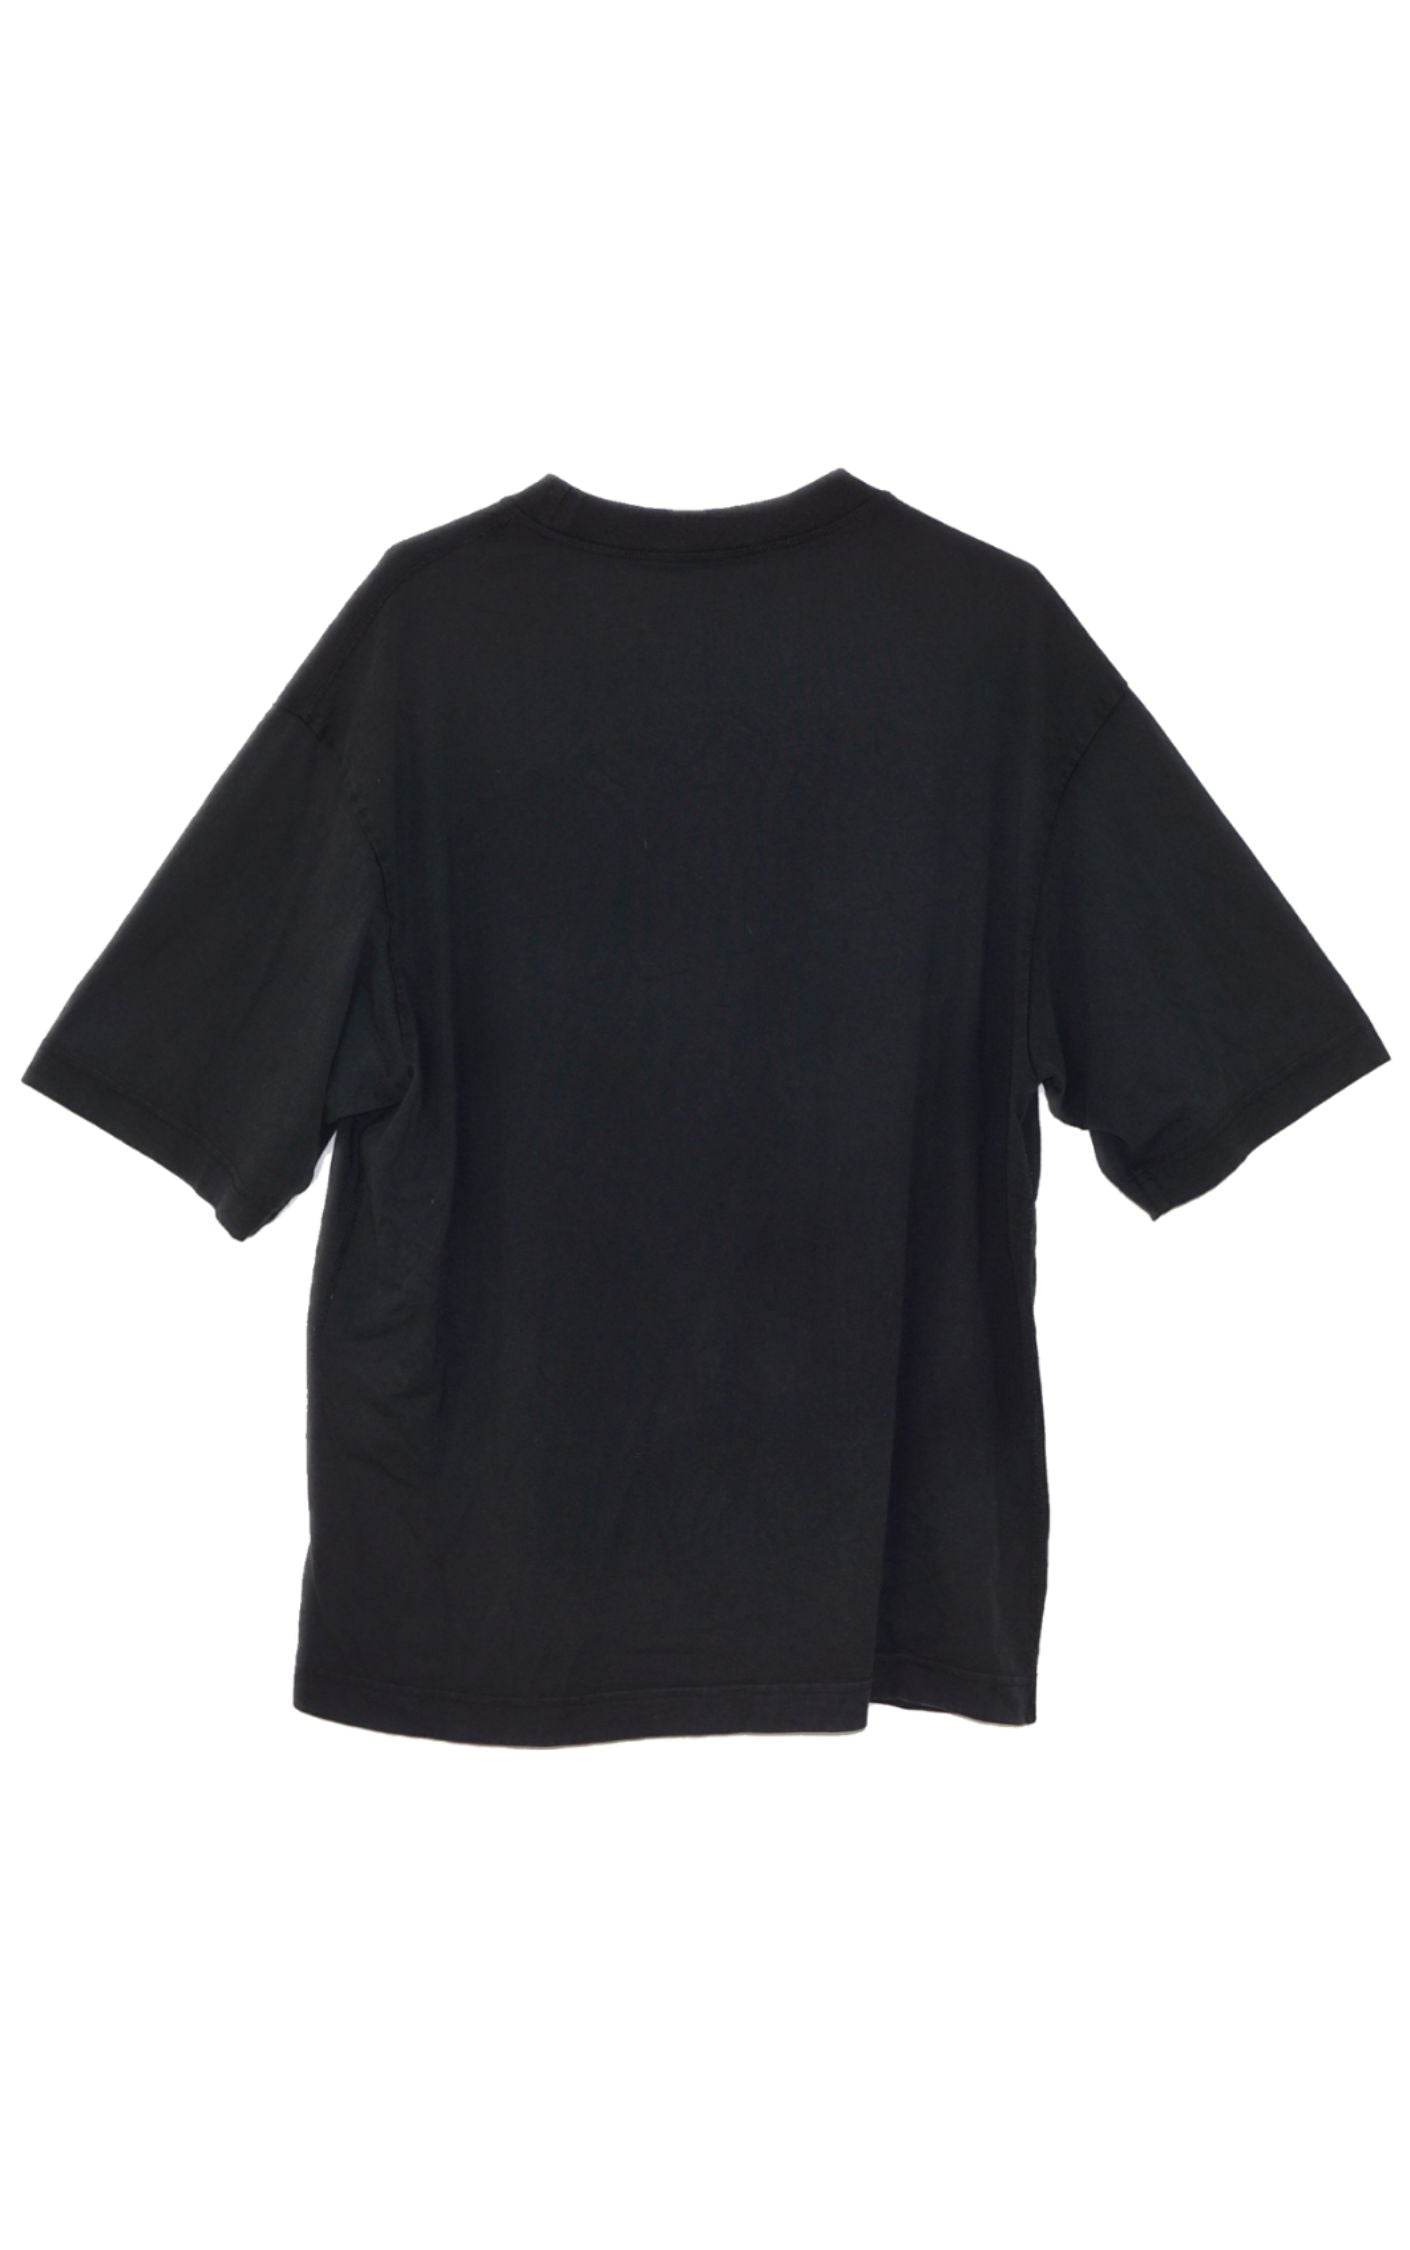 ACNE STUDIOS Logo Black T-Shirt resellum